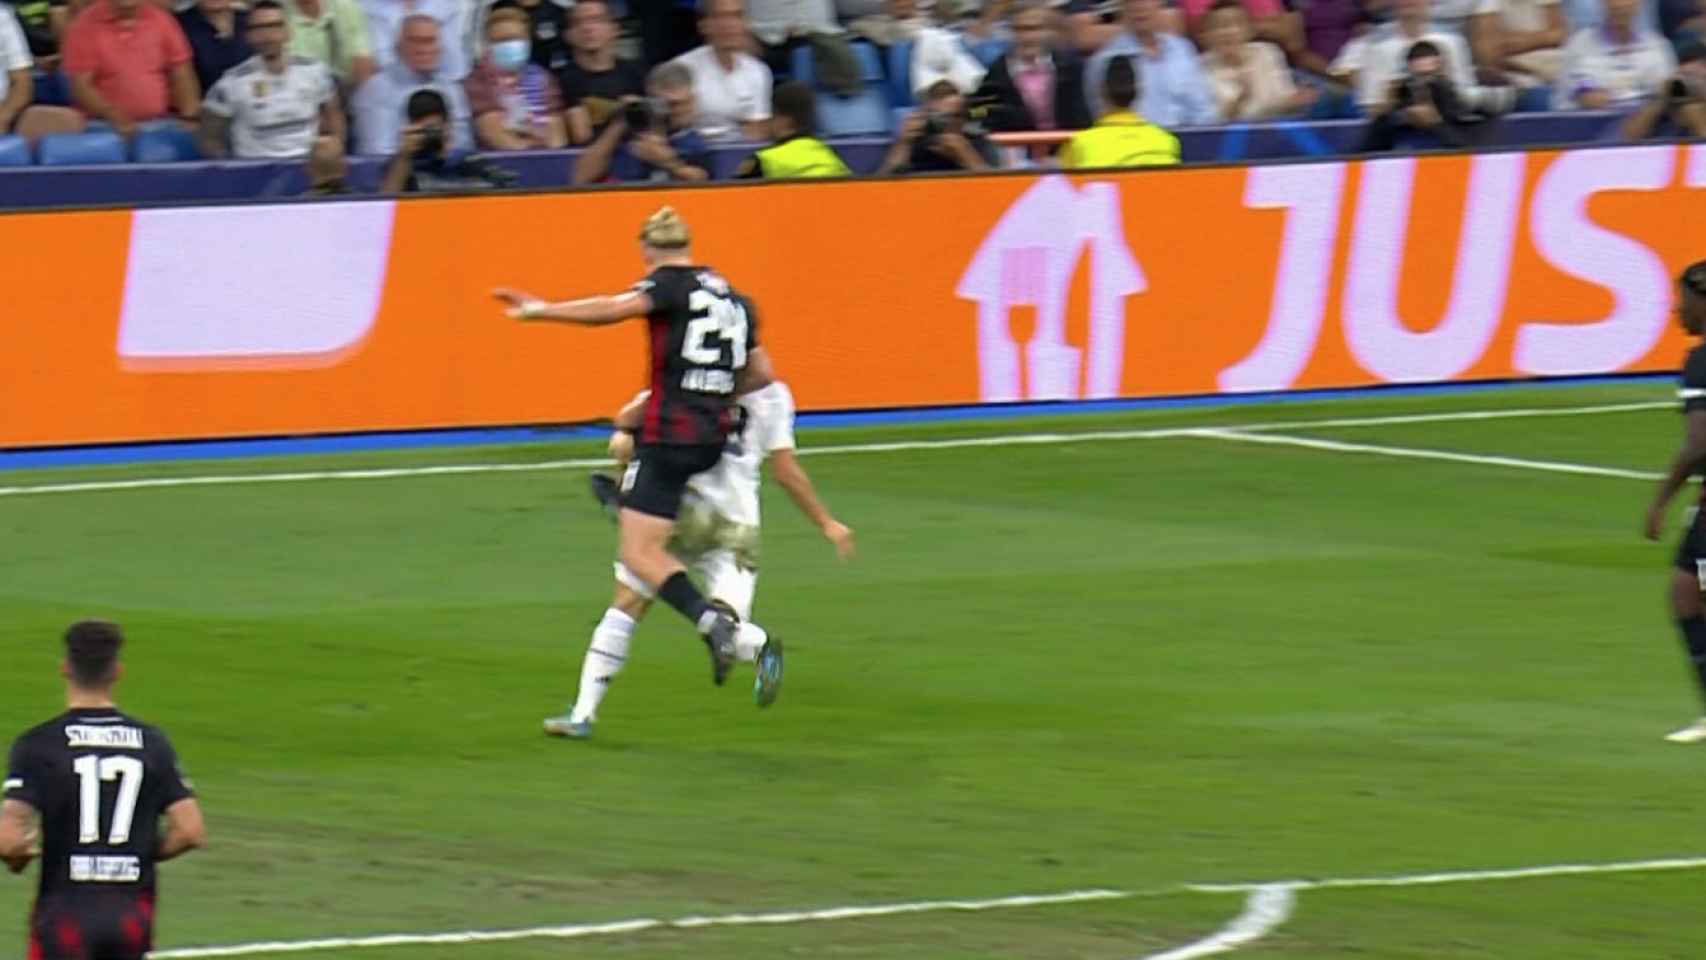 Posible penalti no pitado a Luka Modric